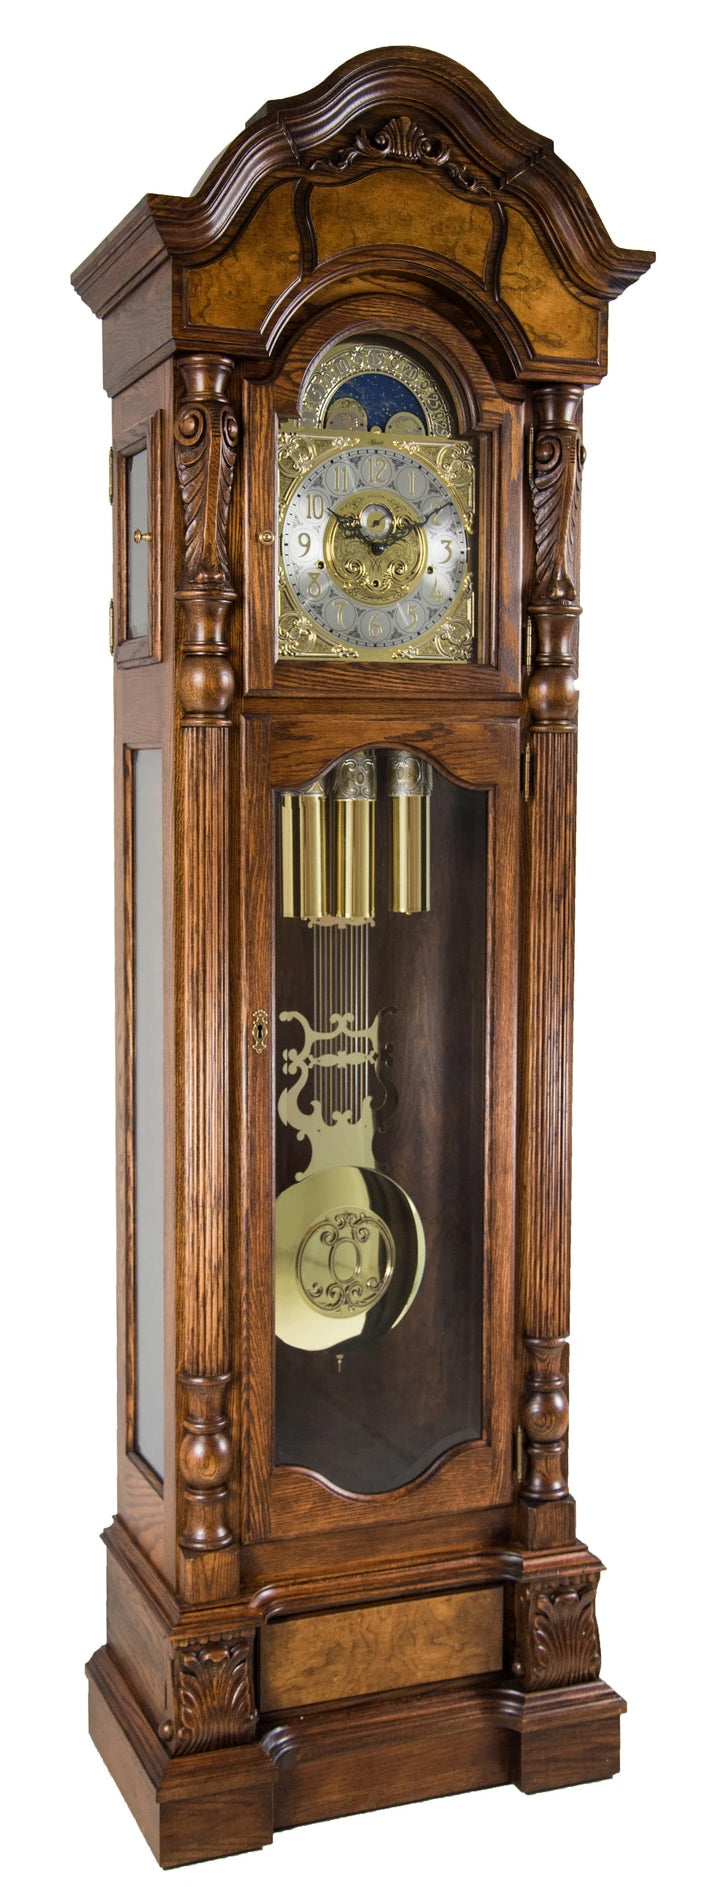 Anstead Tubular Chimes Grandfather Clock by Hermle Clocks - Dark Oak